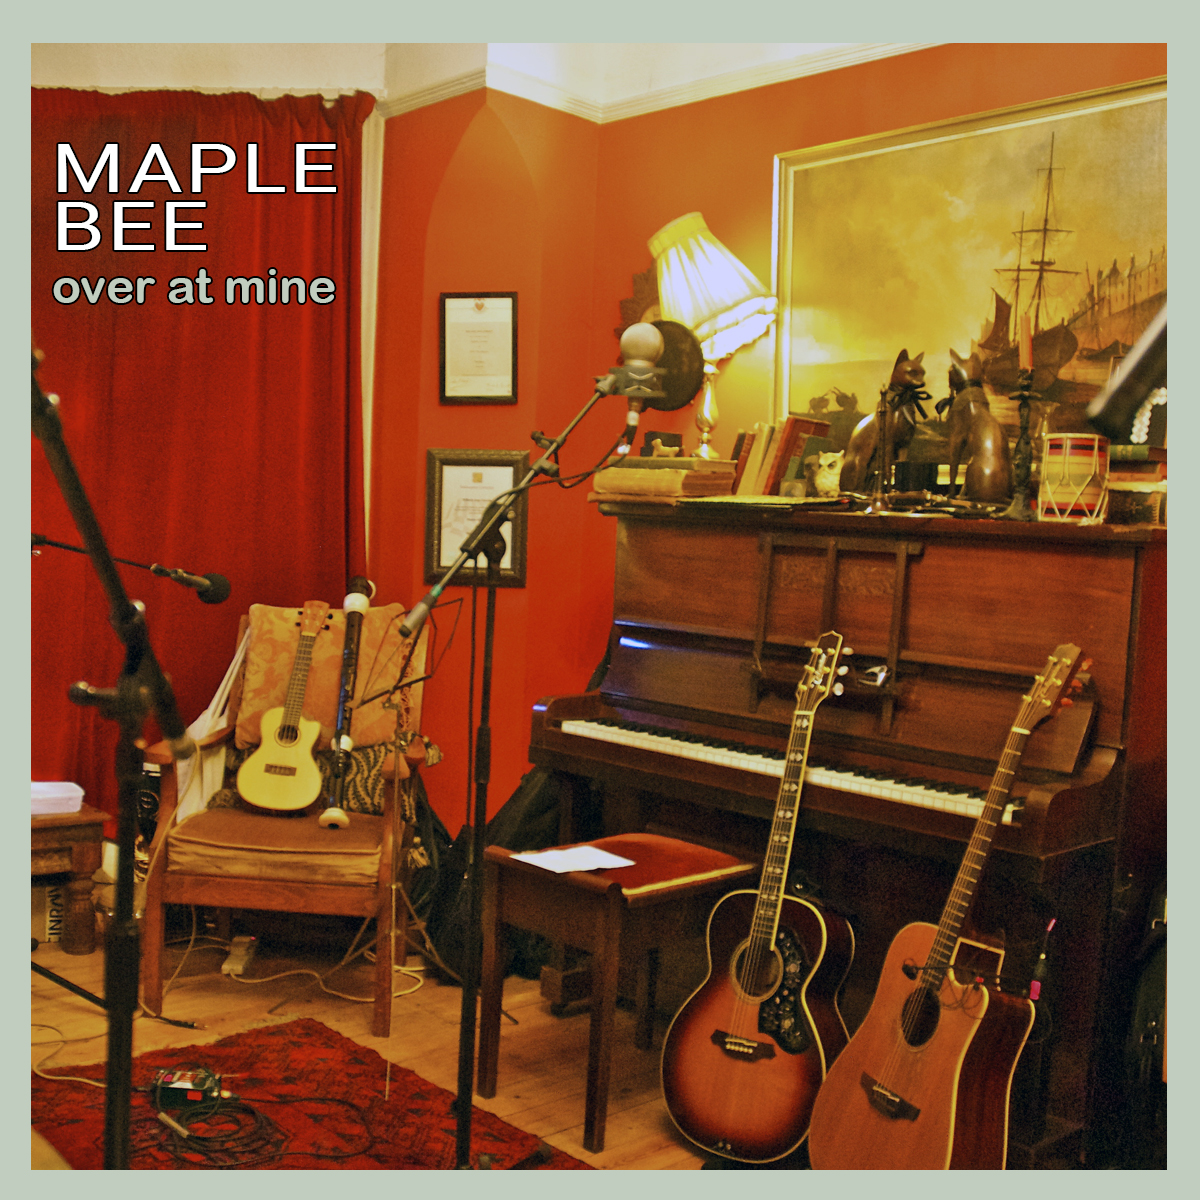 Maple Bee Little Victories Album Cover